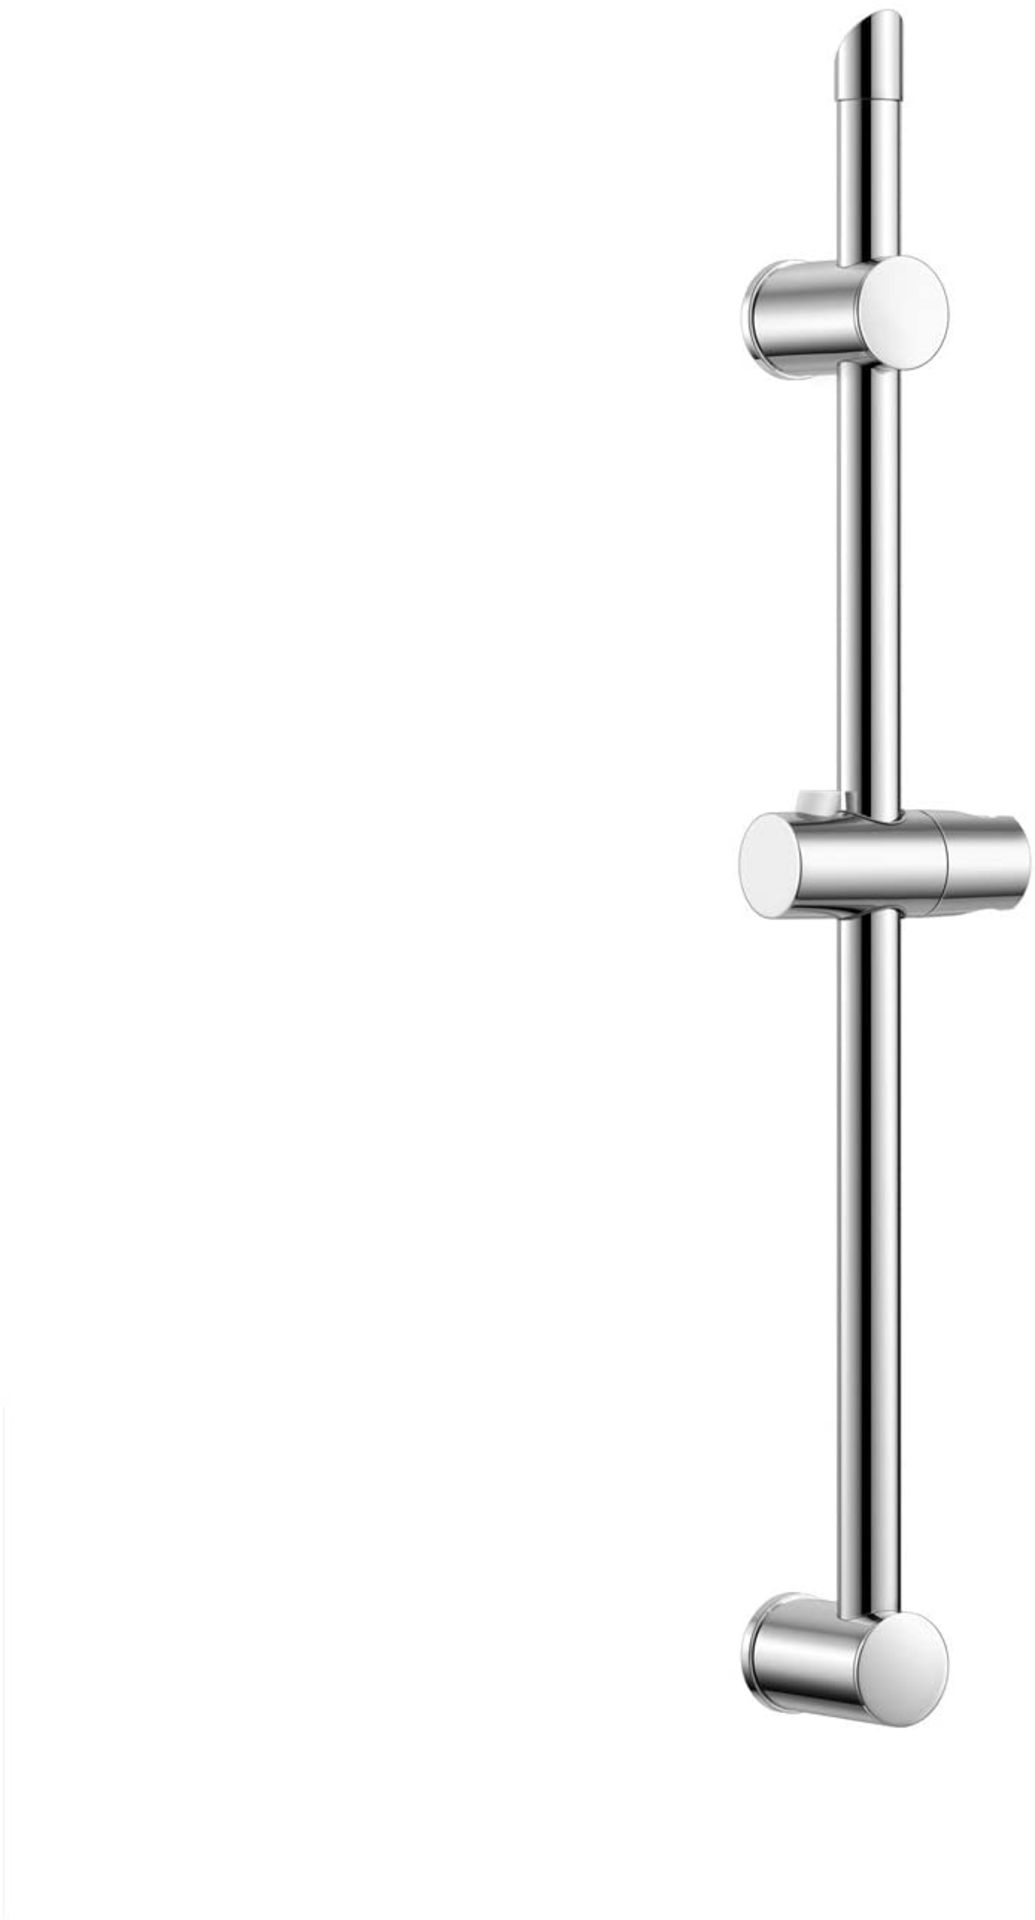 (GC1012) Round Hand Held Mixer Shower Holder Riser Rail Stainless Steel Bar Bracket . Durable s...